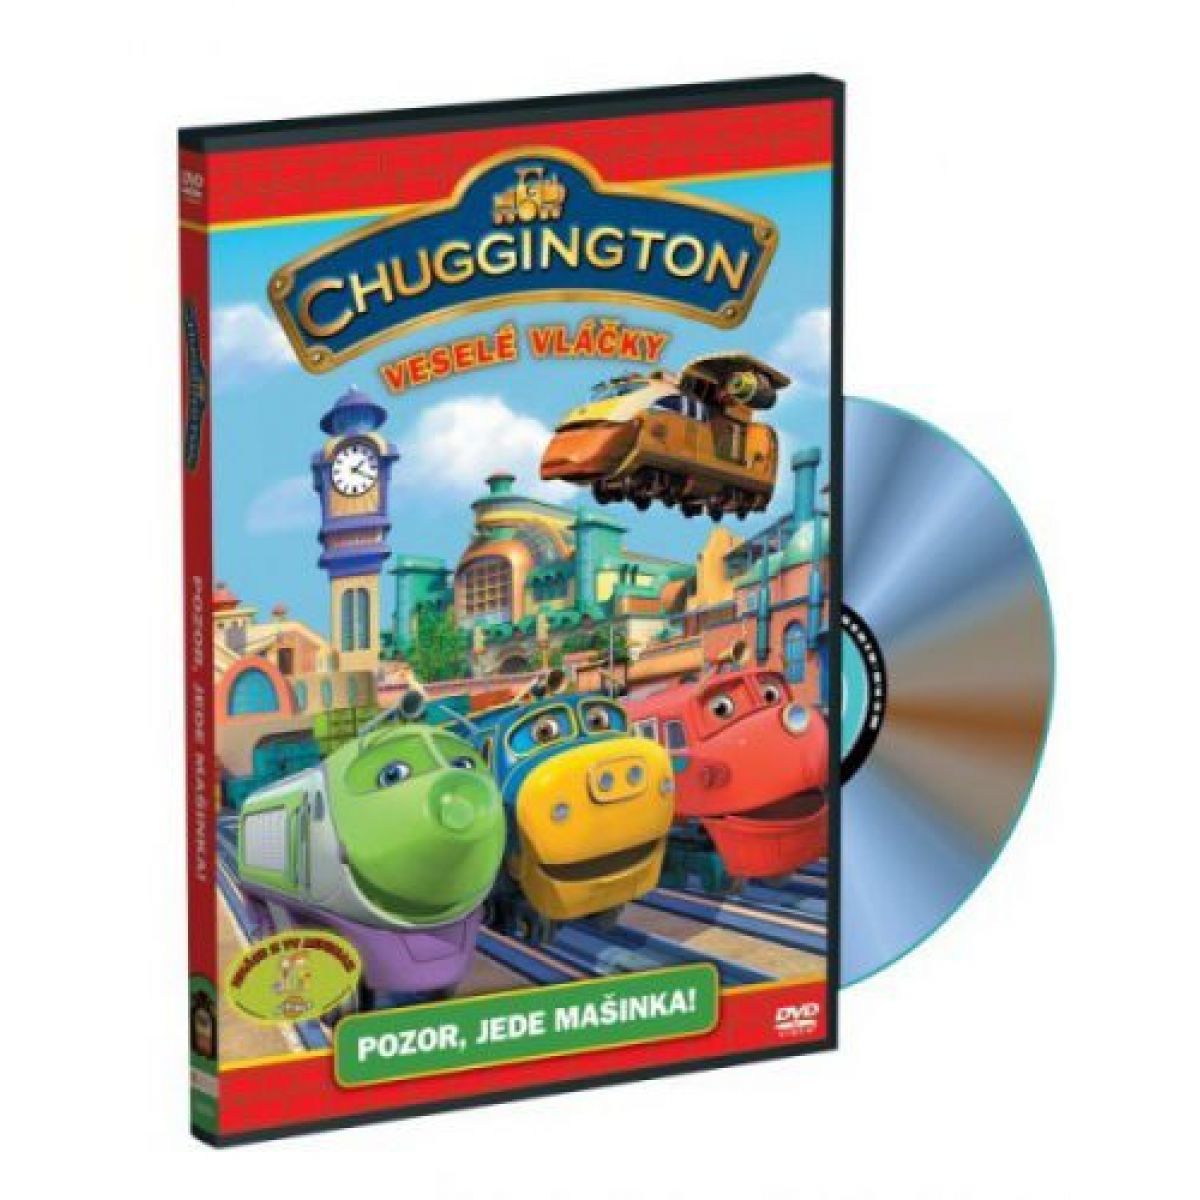 DVD Chuggington - Veselé vláčky - Pozor, jede mašinka!